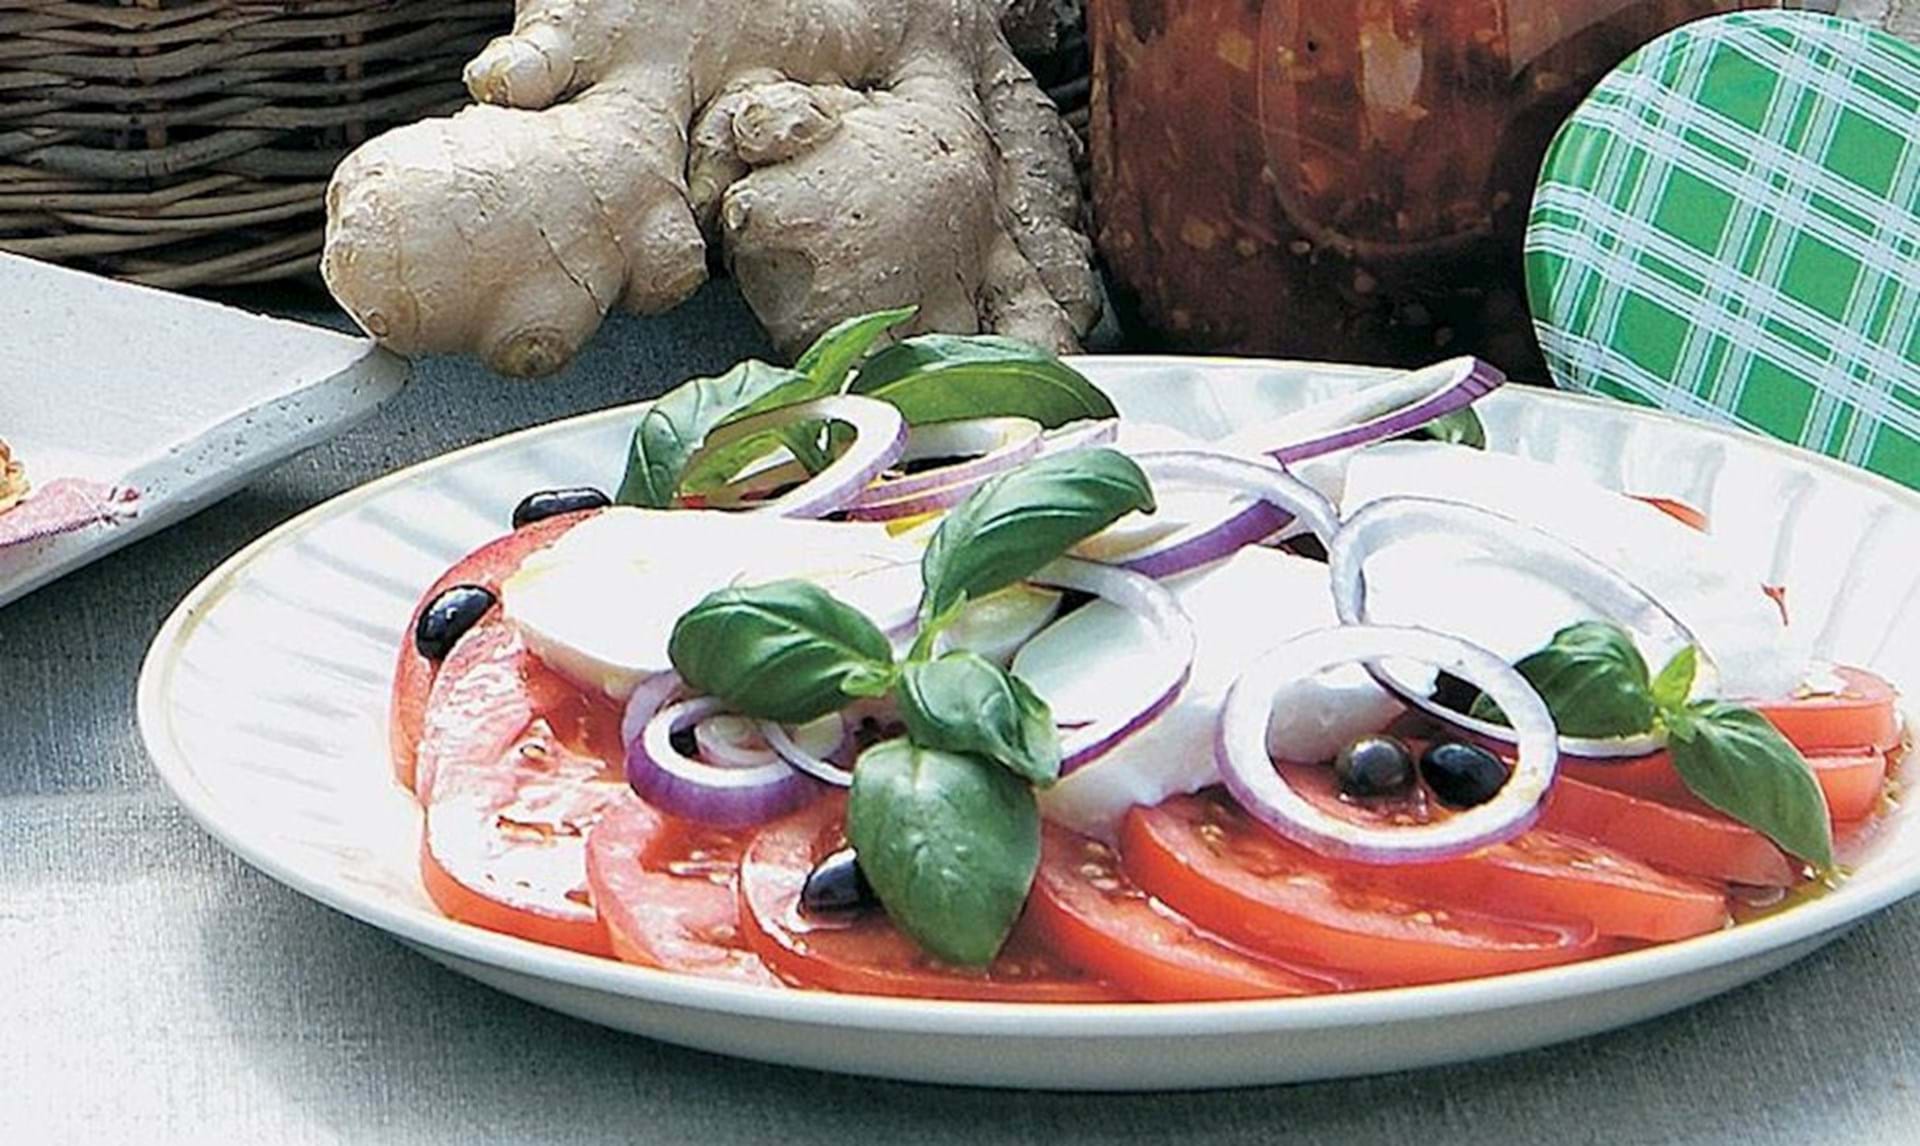 Fem Krydret tolerance Let salat: Tomatsalat med mozzarella og basilikum - ALT.dk